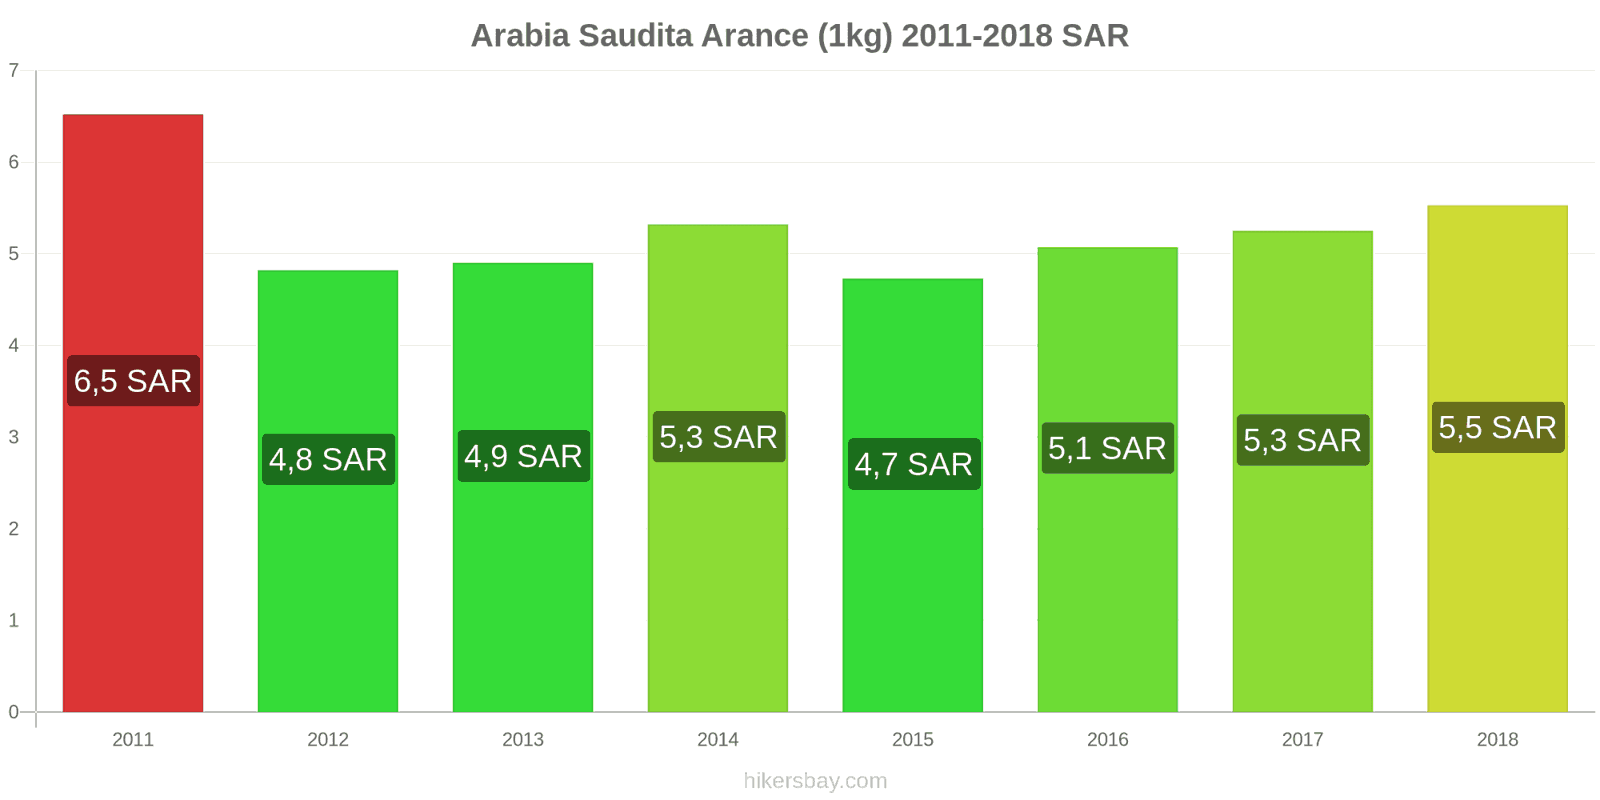 Arabia Saudita cambi di prezzo Arance (1kg) hikersbay.com